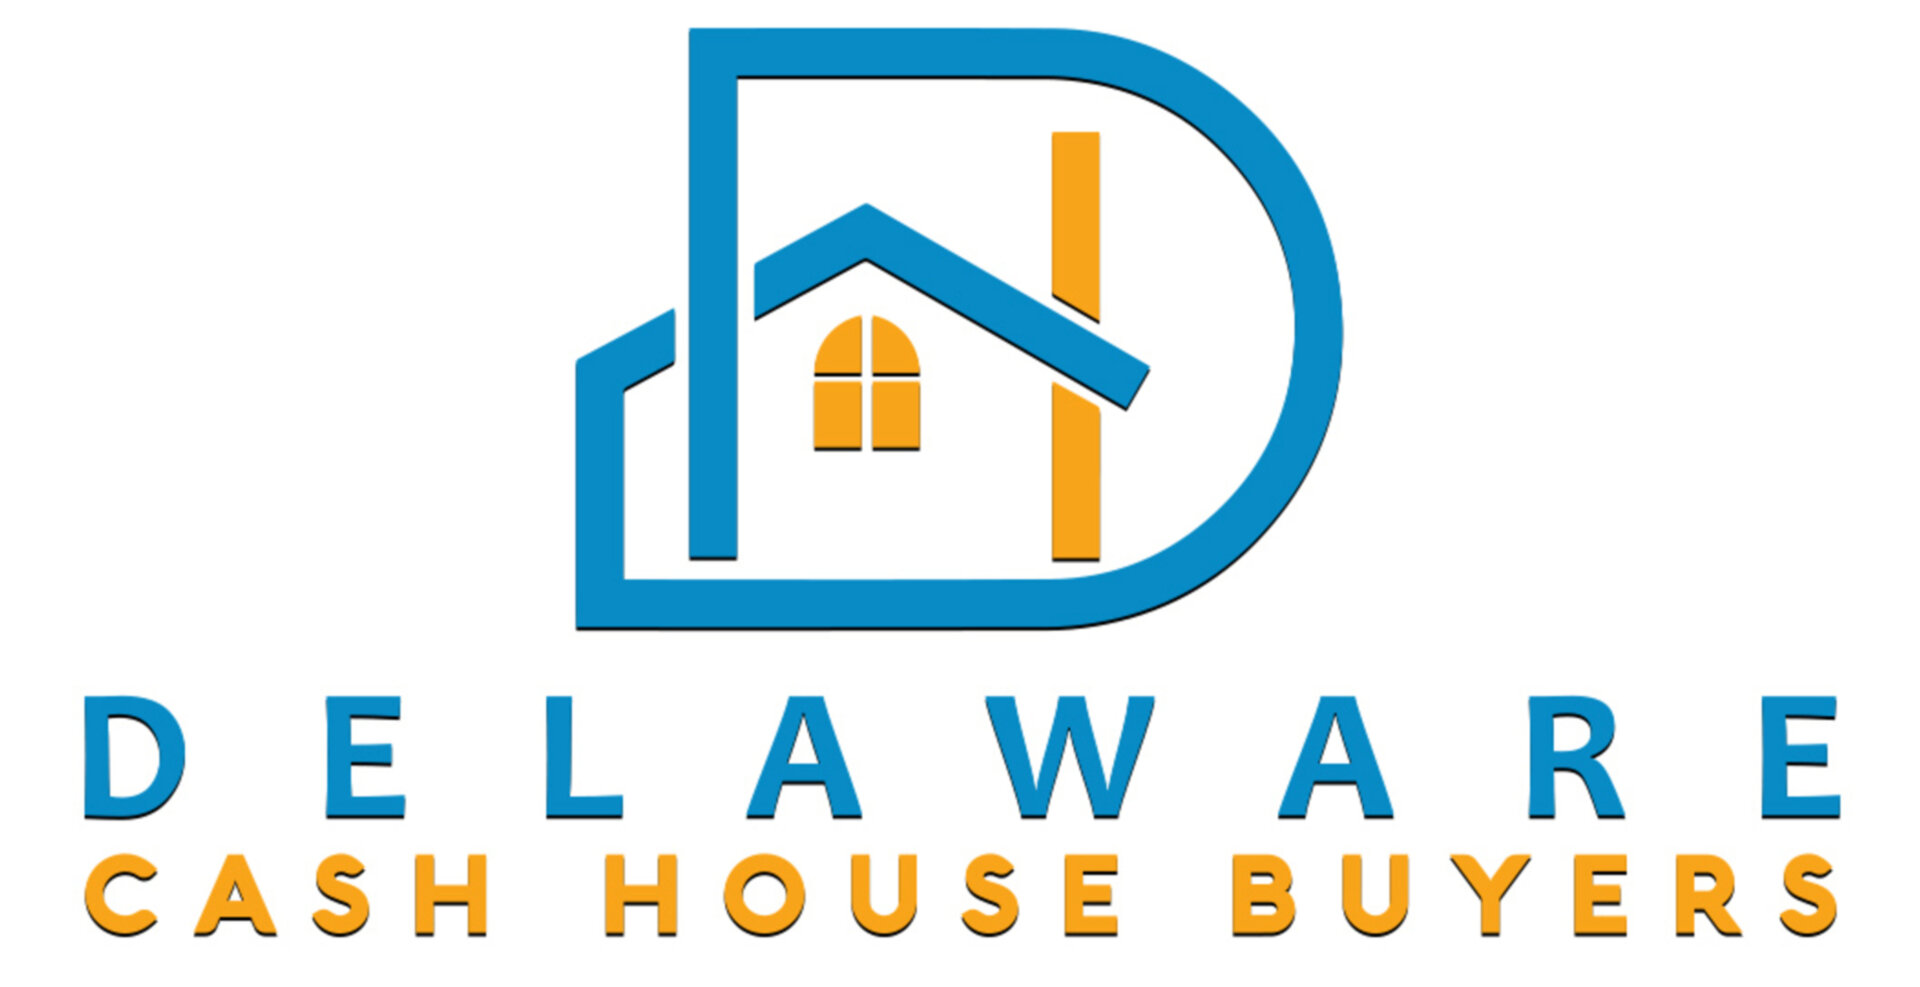 Delaware Cash House Buyers logo